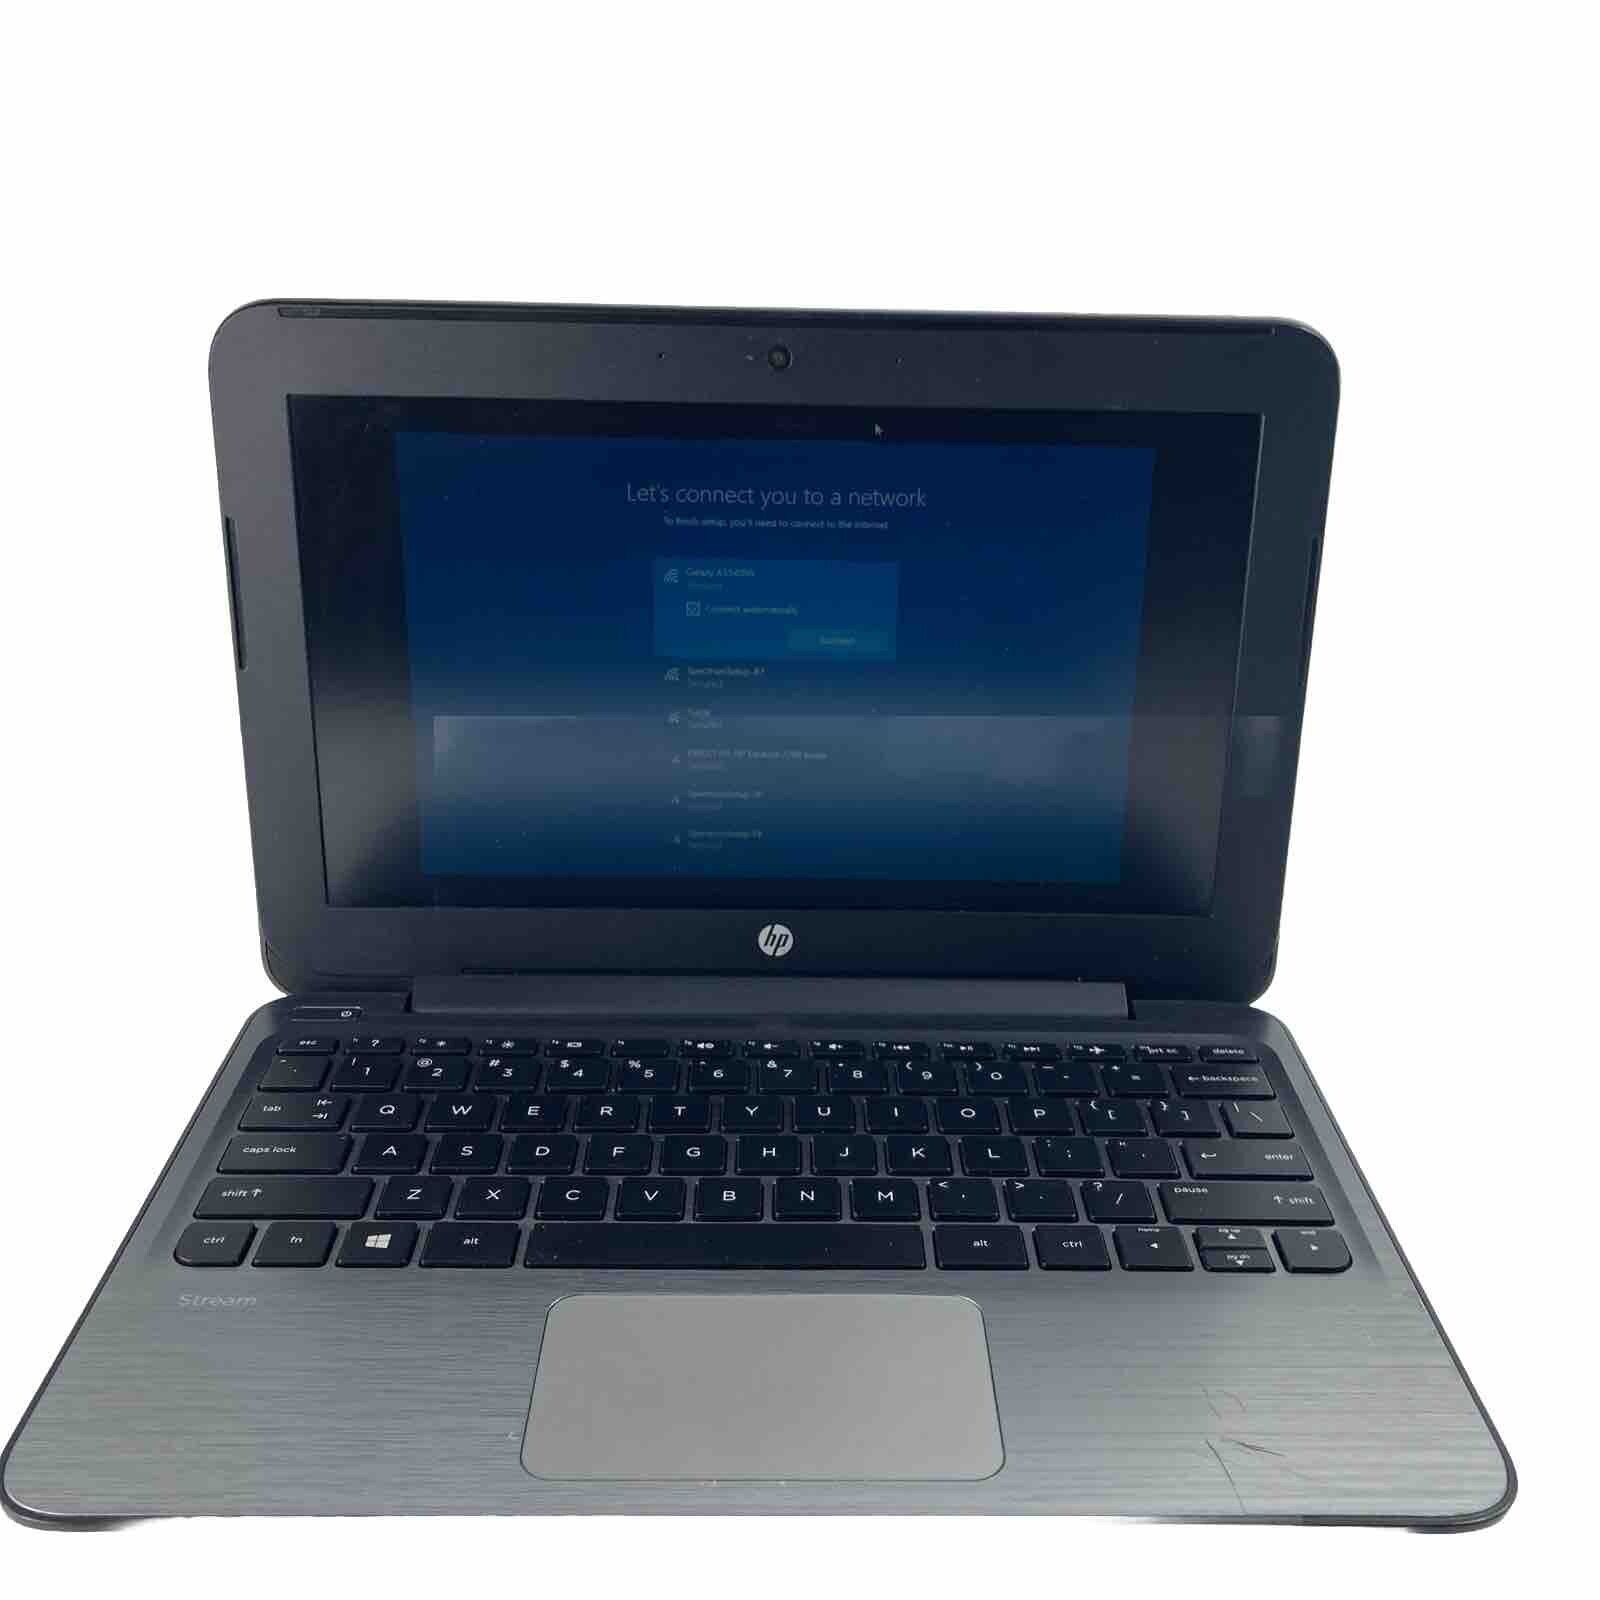 HP Stream 11 Pro G2 Laptop Intel Celeron Model#N3050 (1.60GHz) 2GB Memory 64